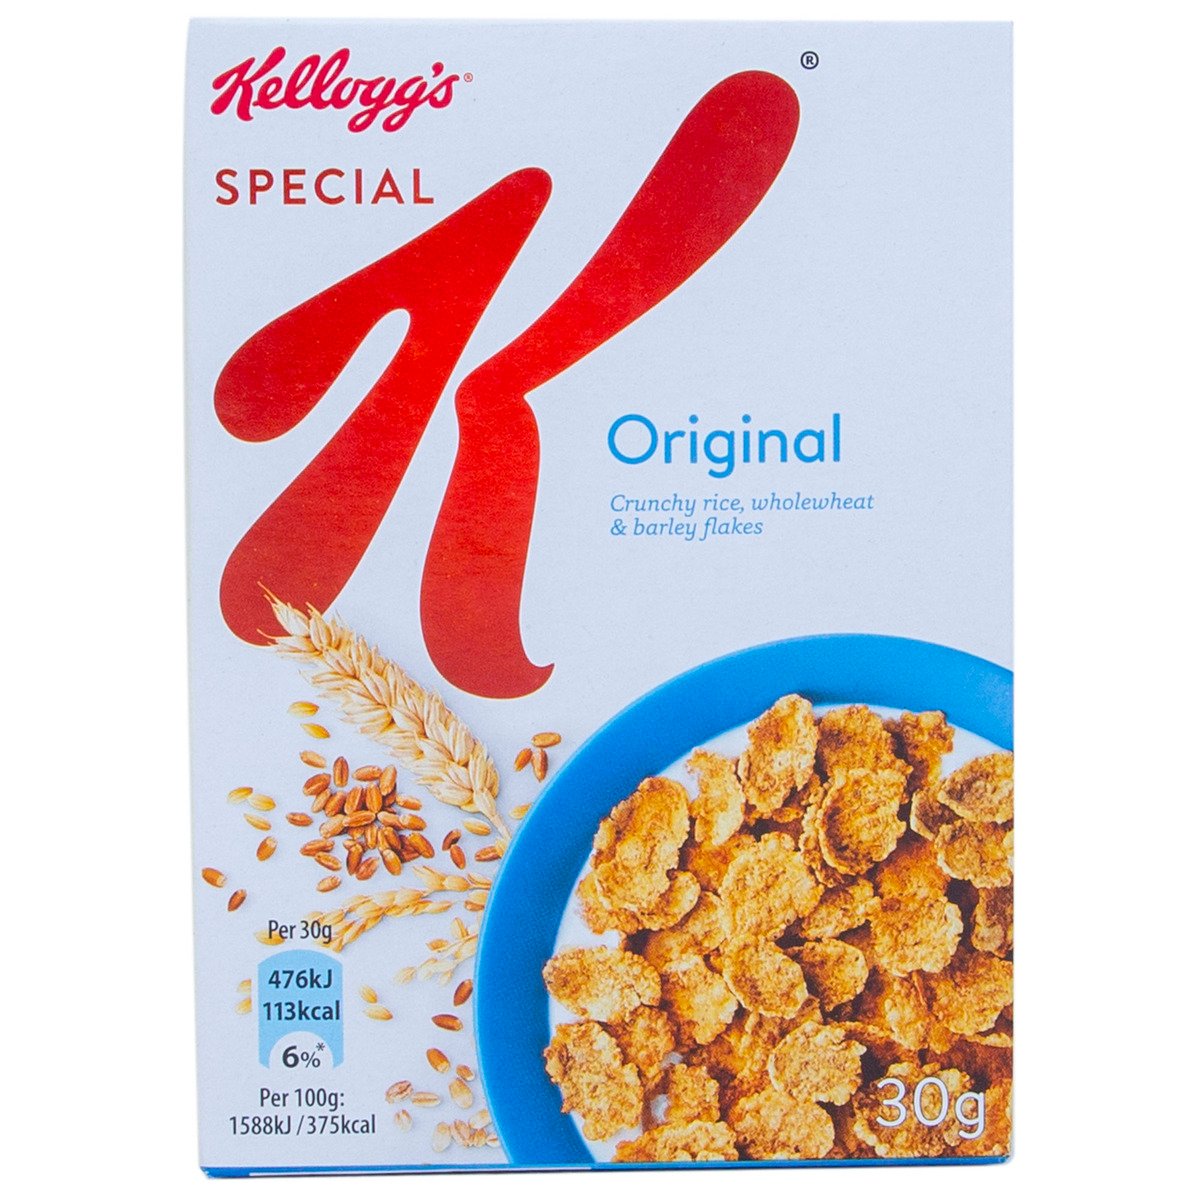 Kellogg's Special K Original 30 g Online at Best Price